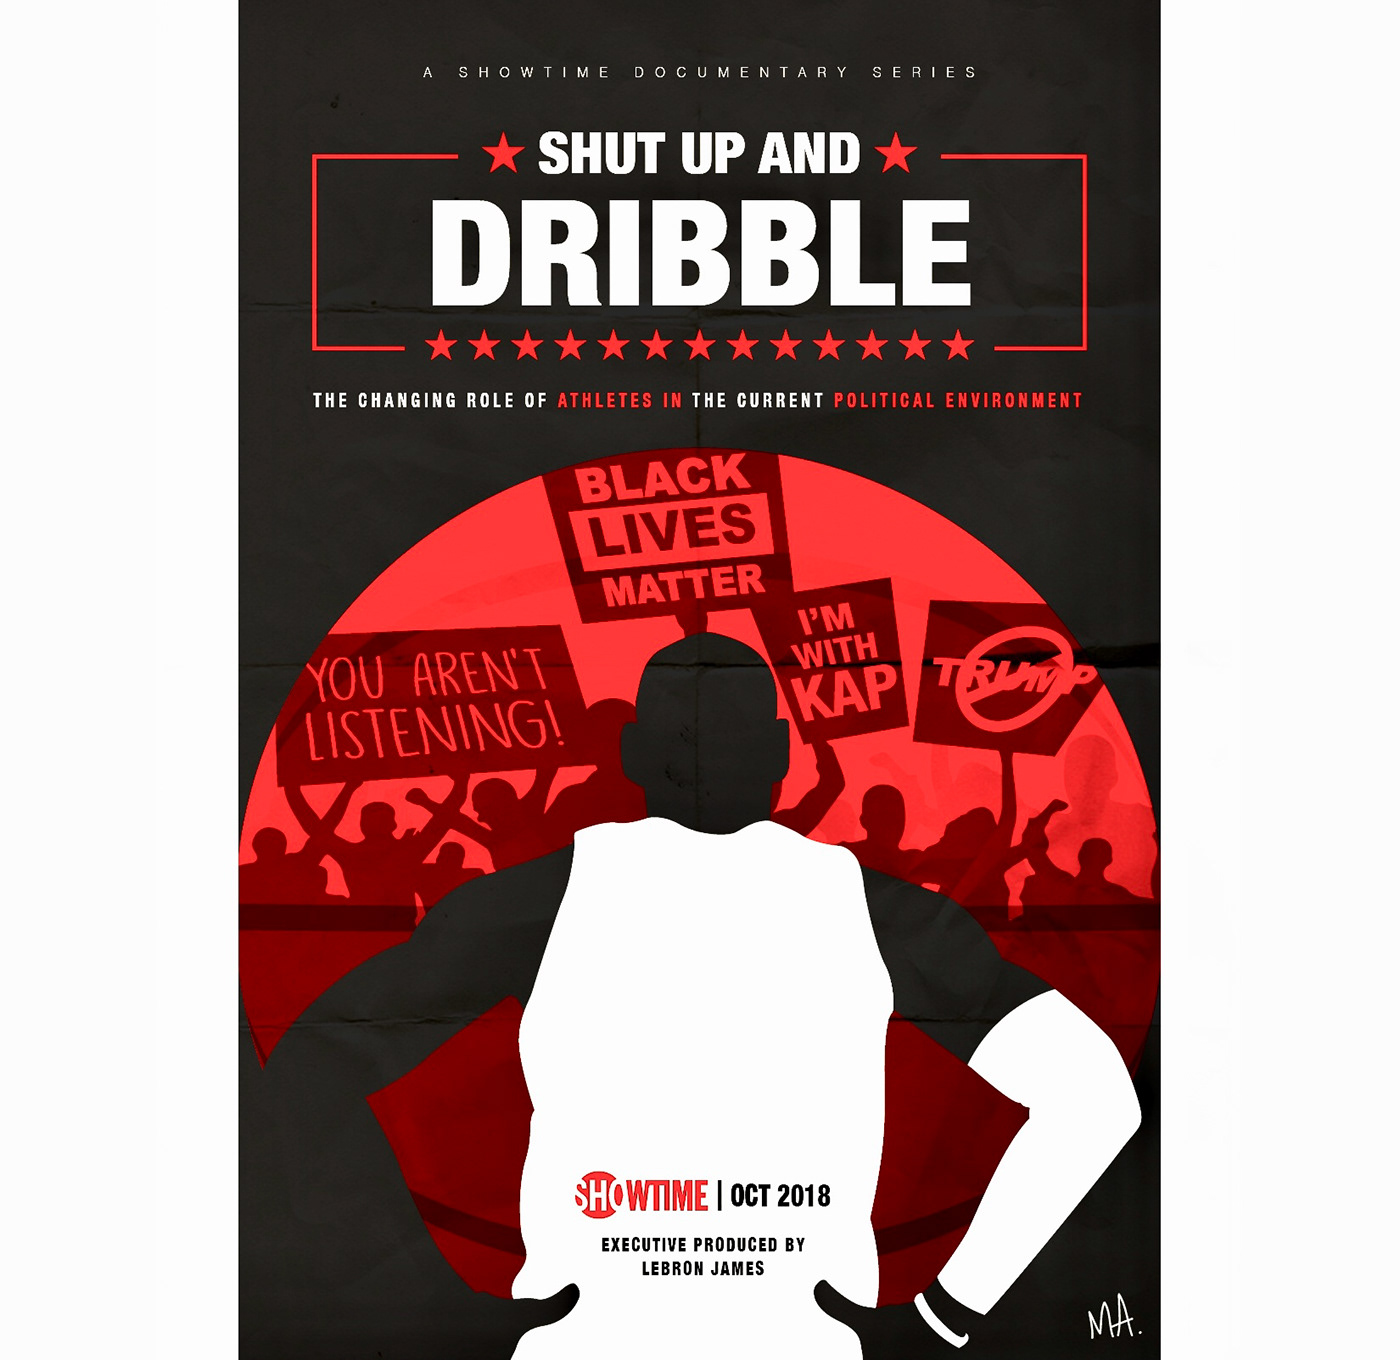 LeBron James poster docuseries politics athletes